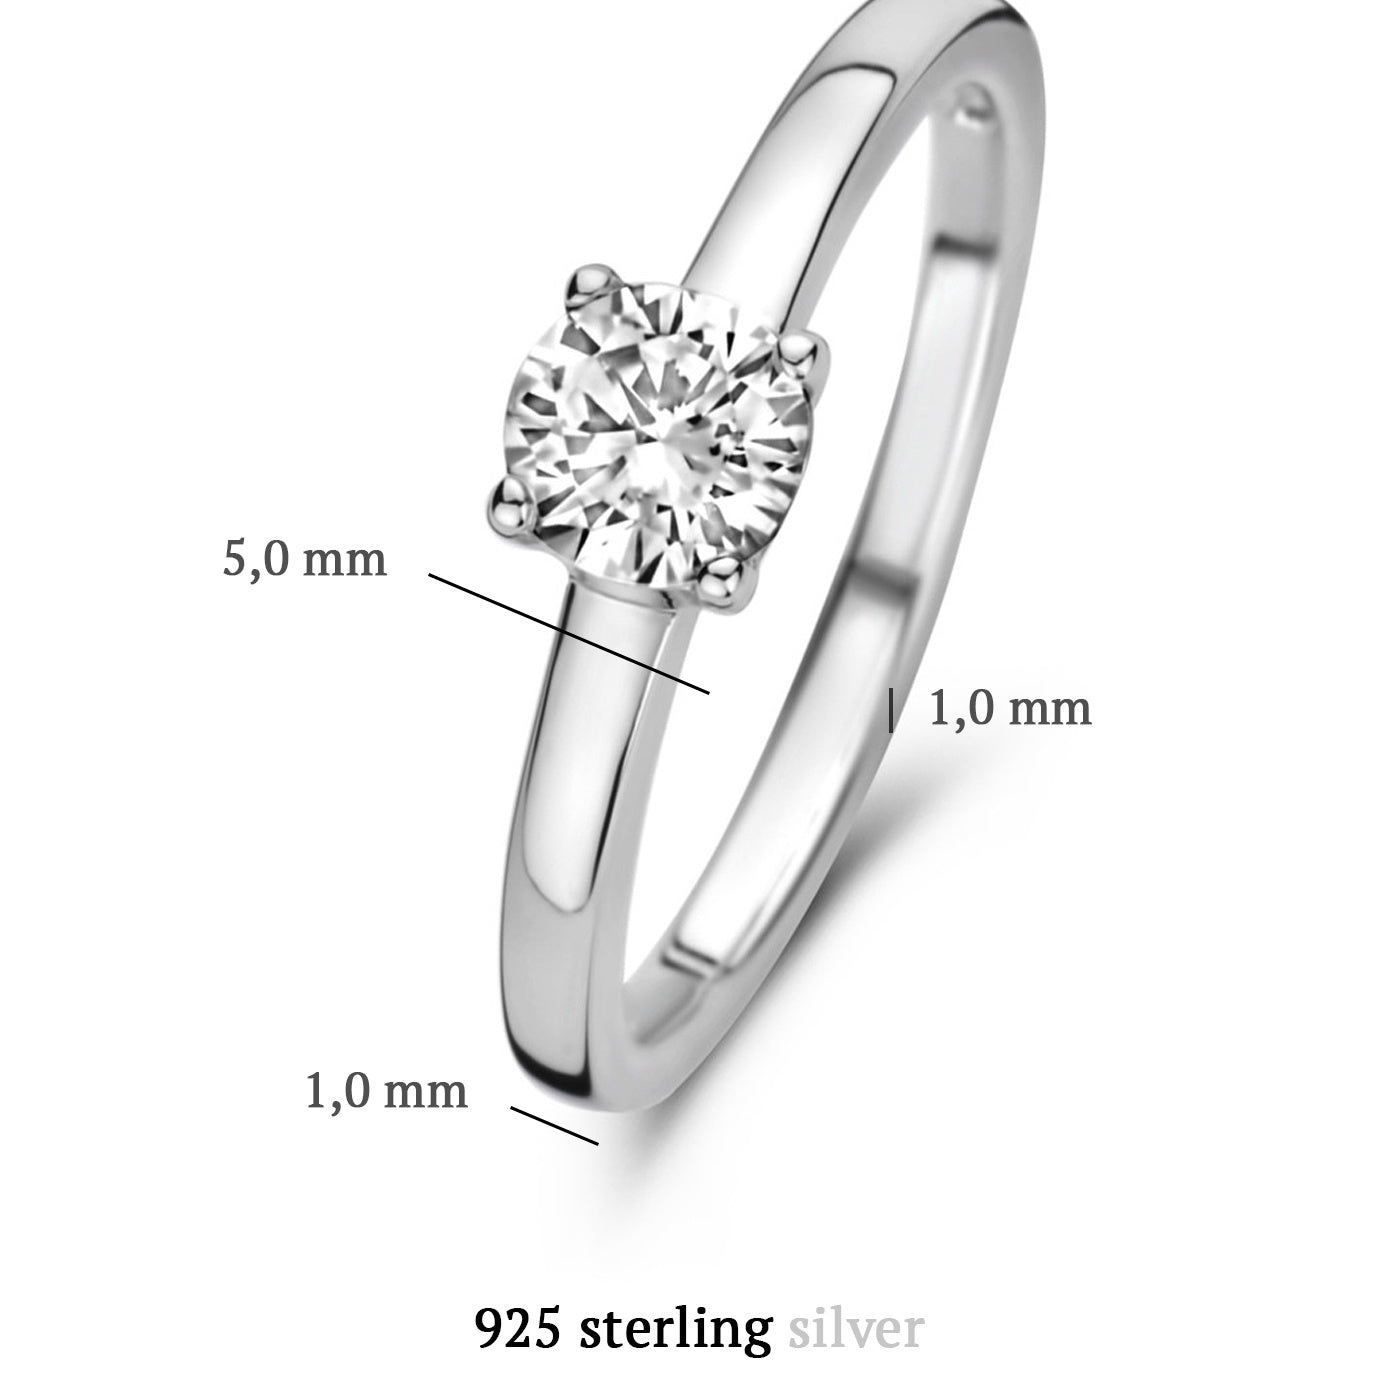 Ponte Vecchio Sofia 925 sterling sølv ring med zirconia sten